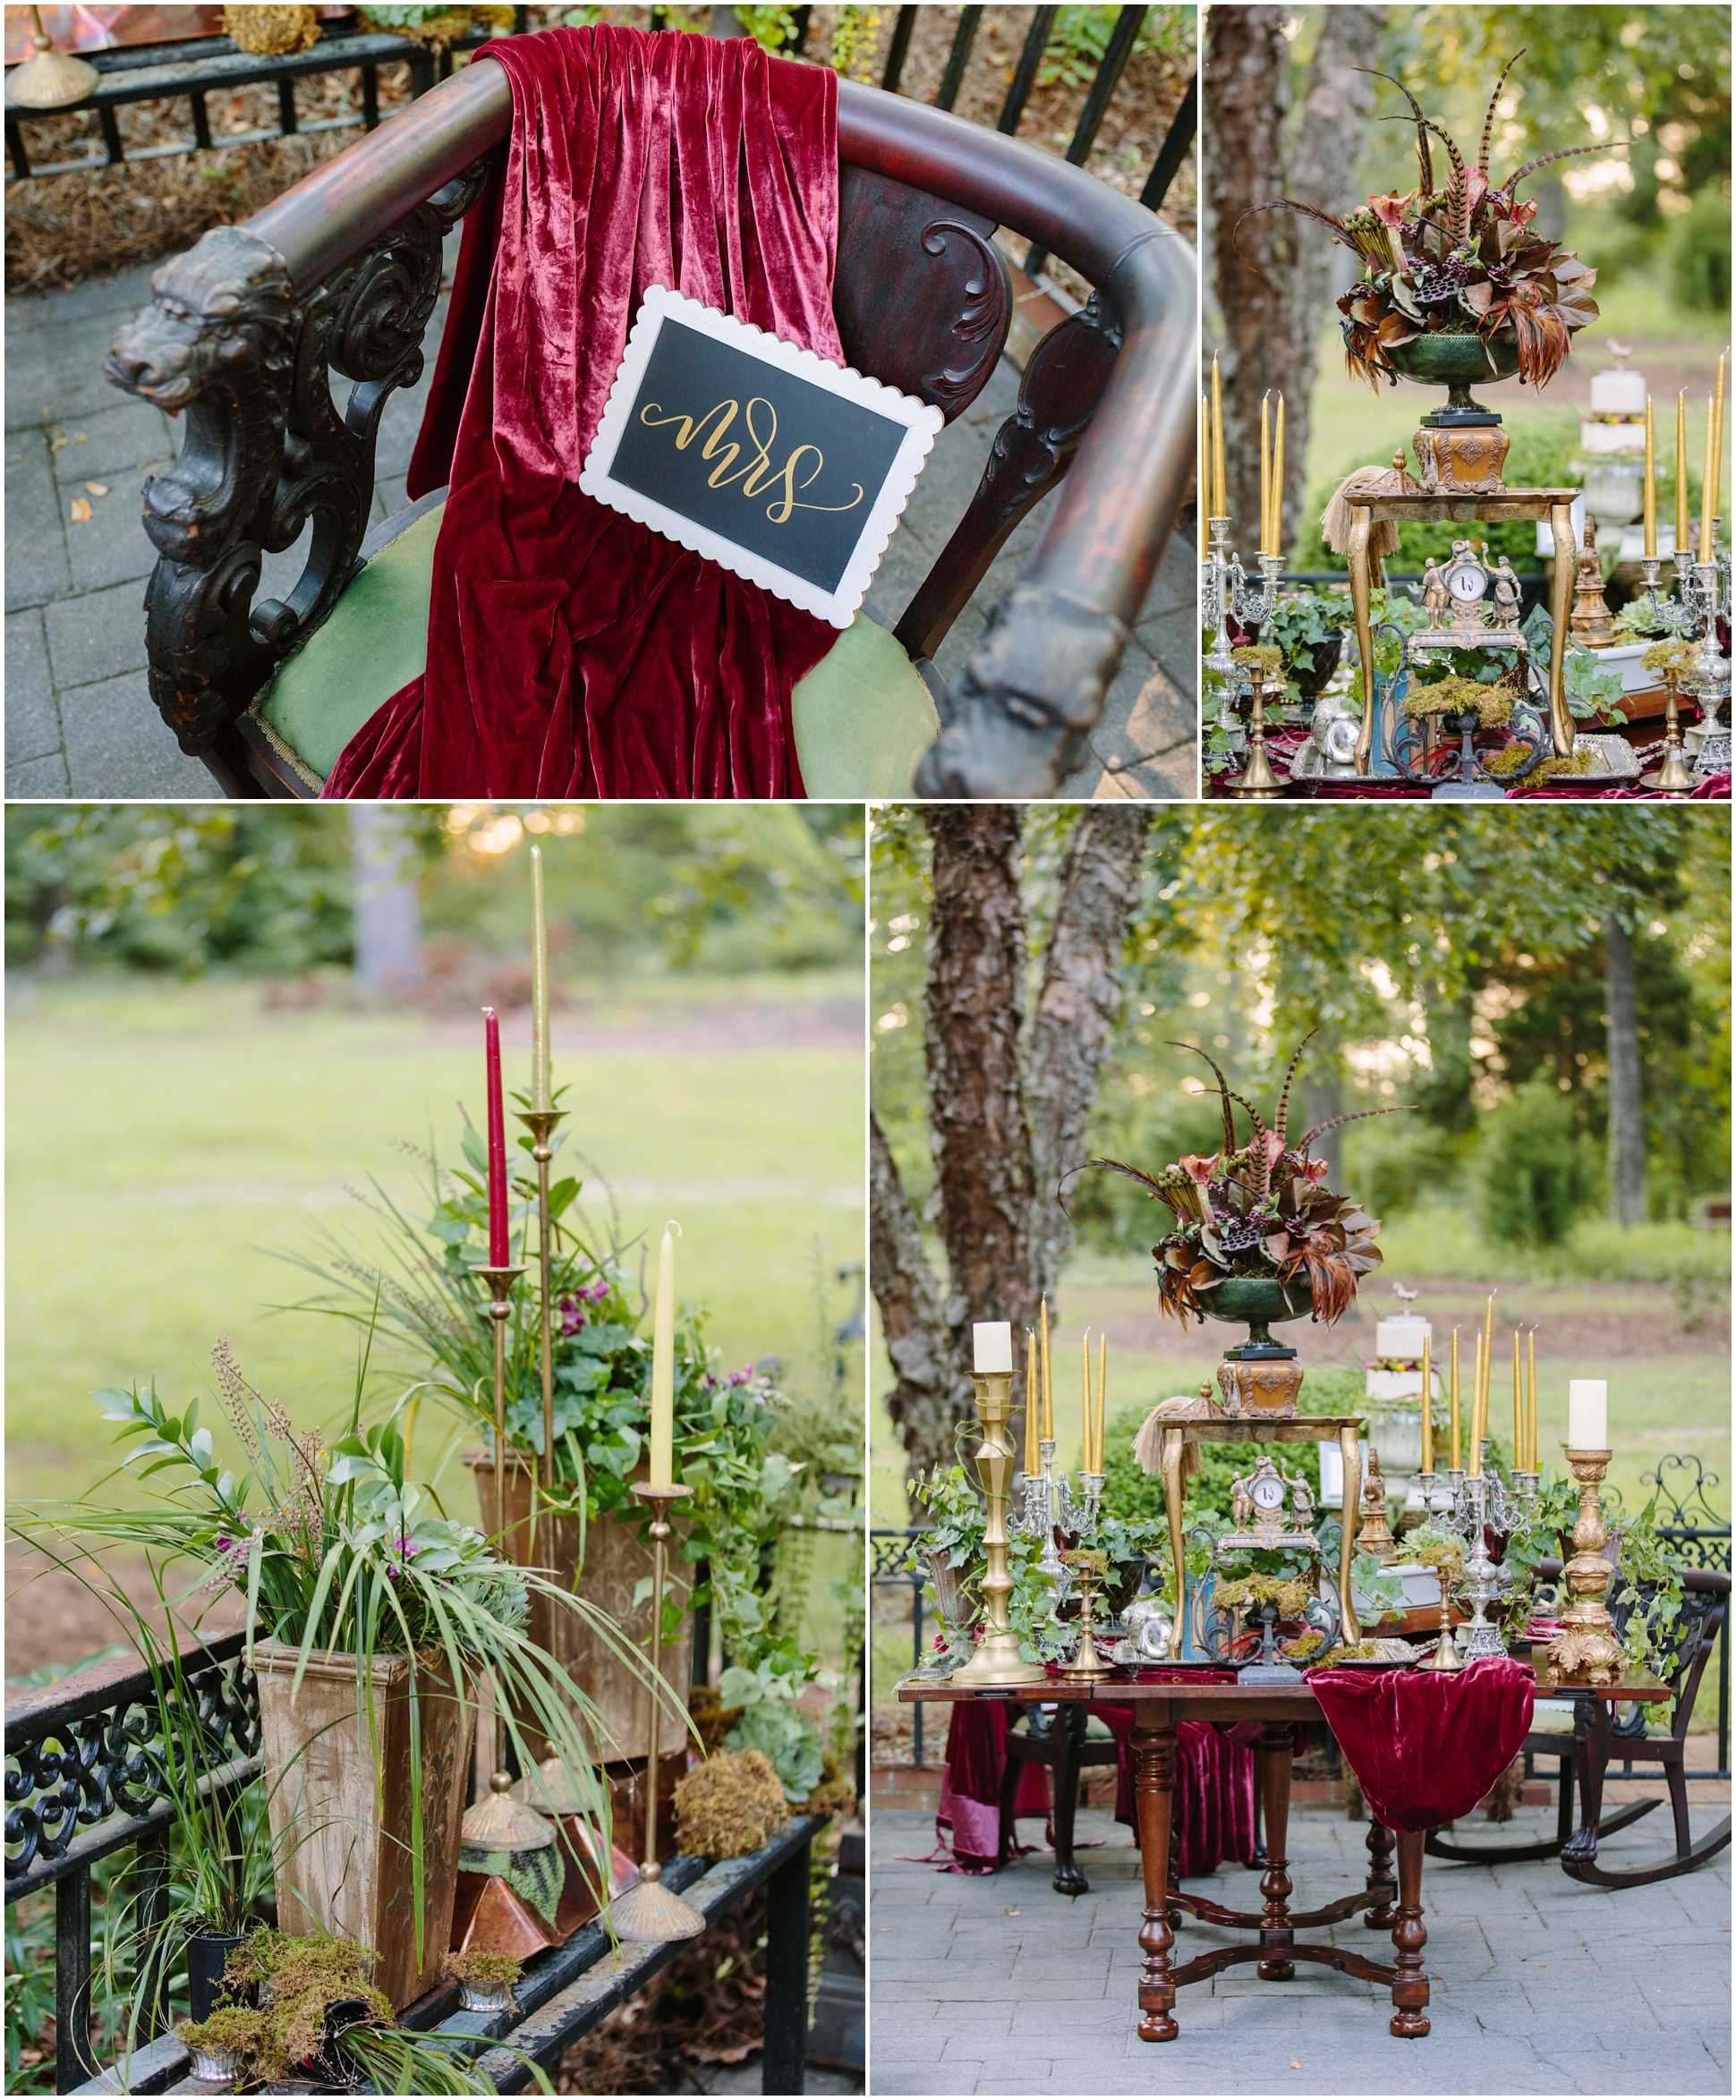 Two Chics Photography | A Courtyard English Garden Wedding Inspiration | www.twochicsphotography.com